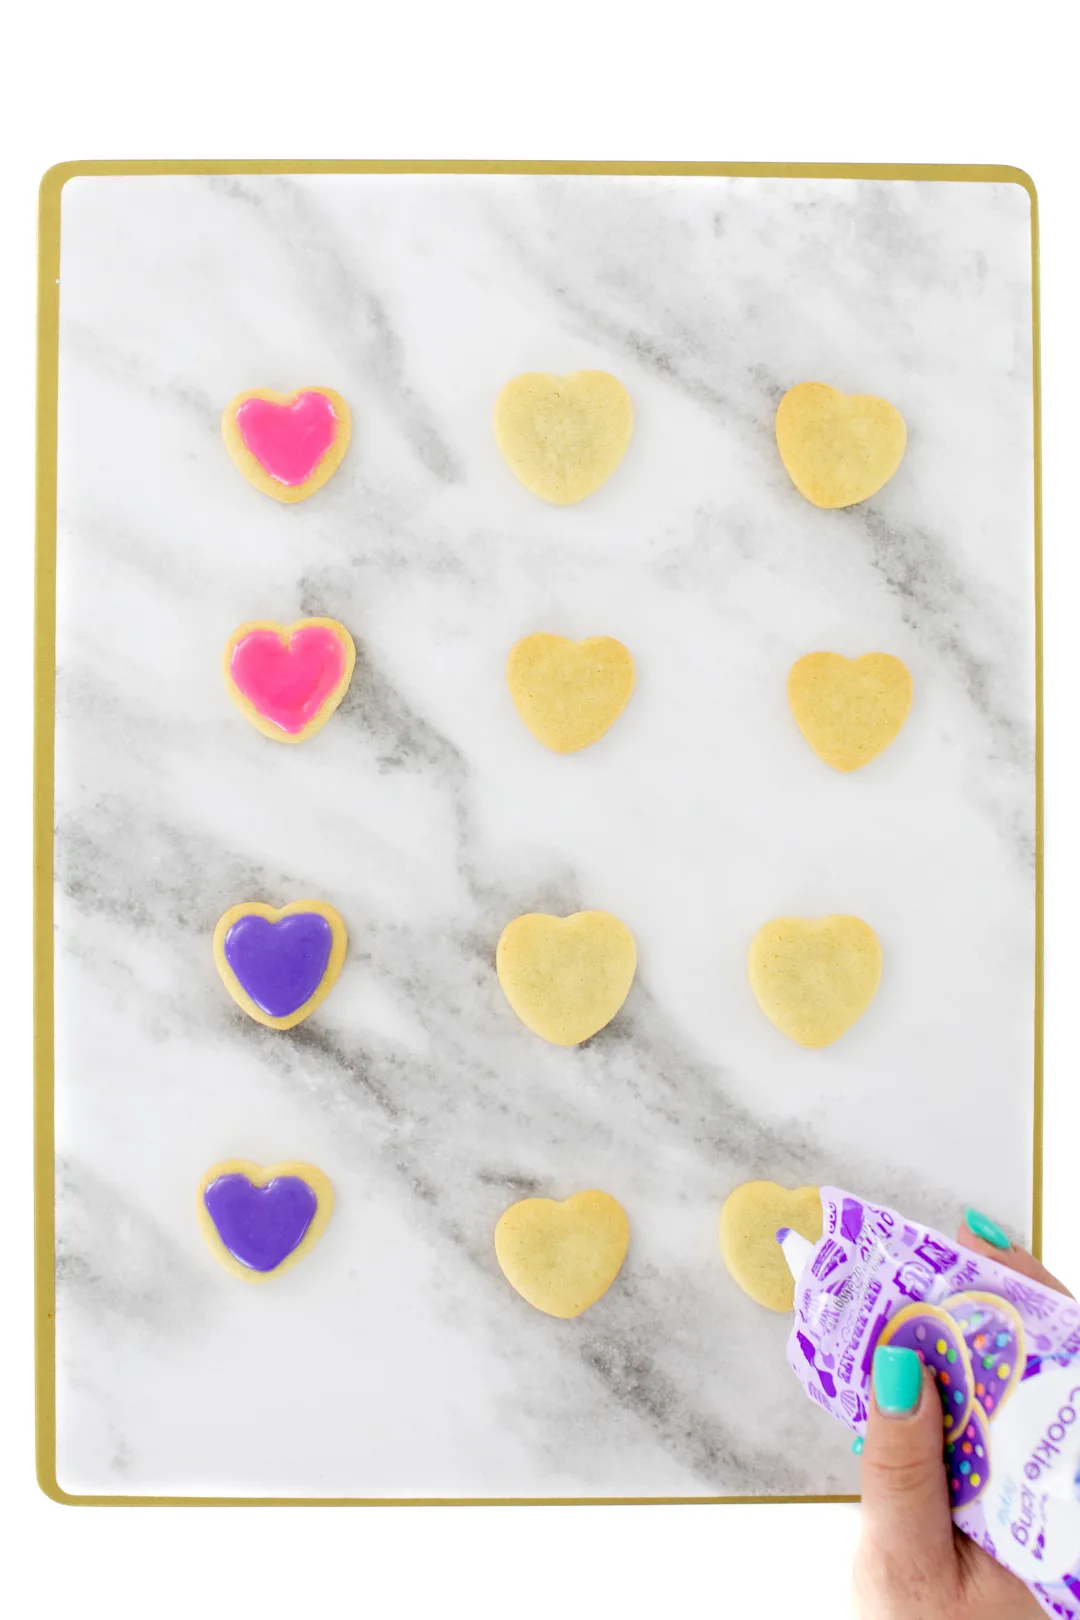 icing mini heart shaped cookies